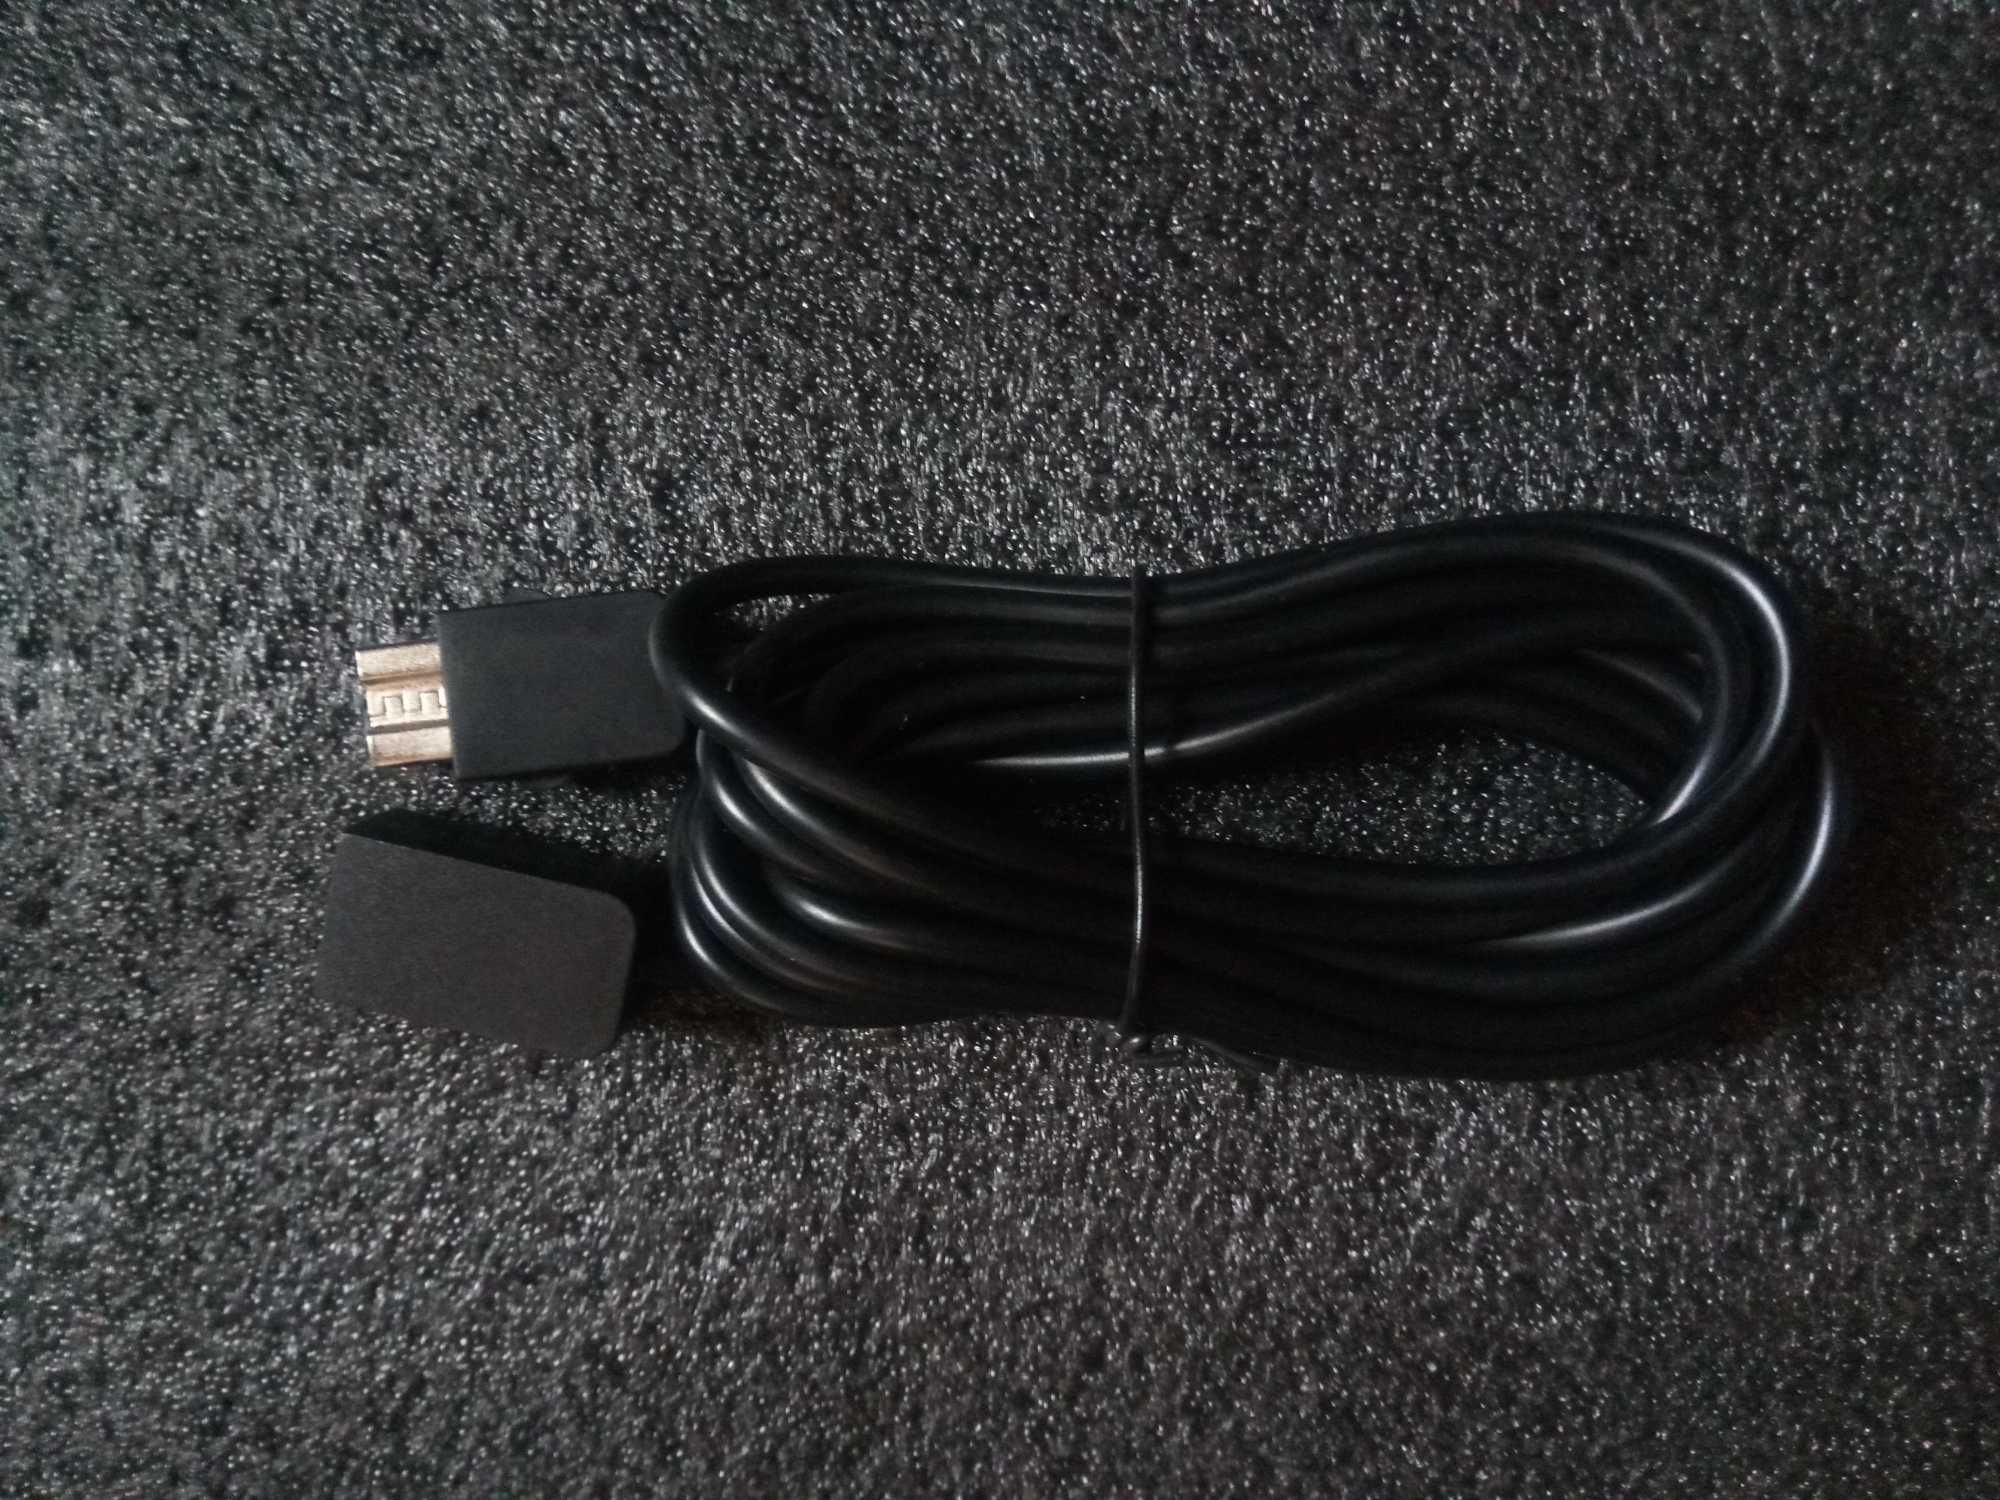 Удлинитель кабель контроллера Nes mini Snes mini Wii